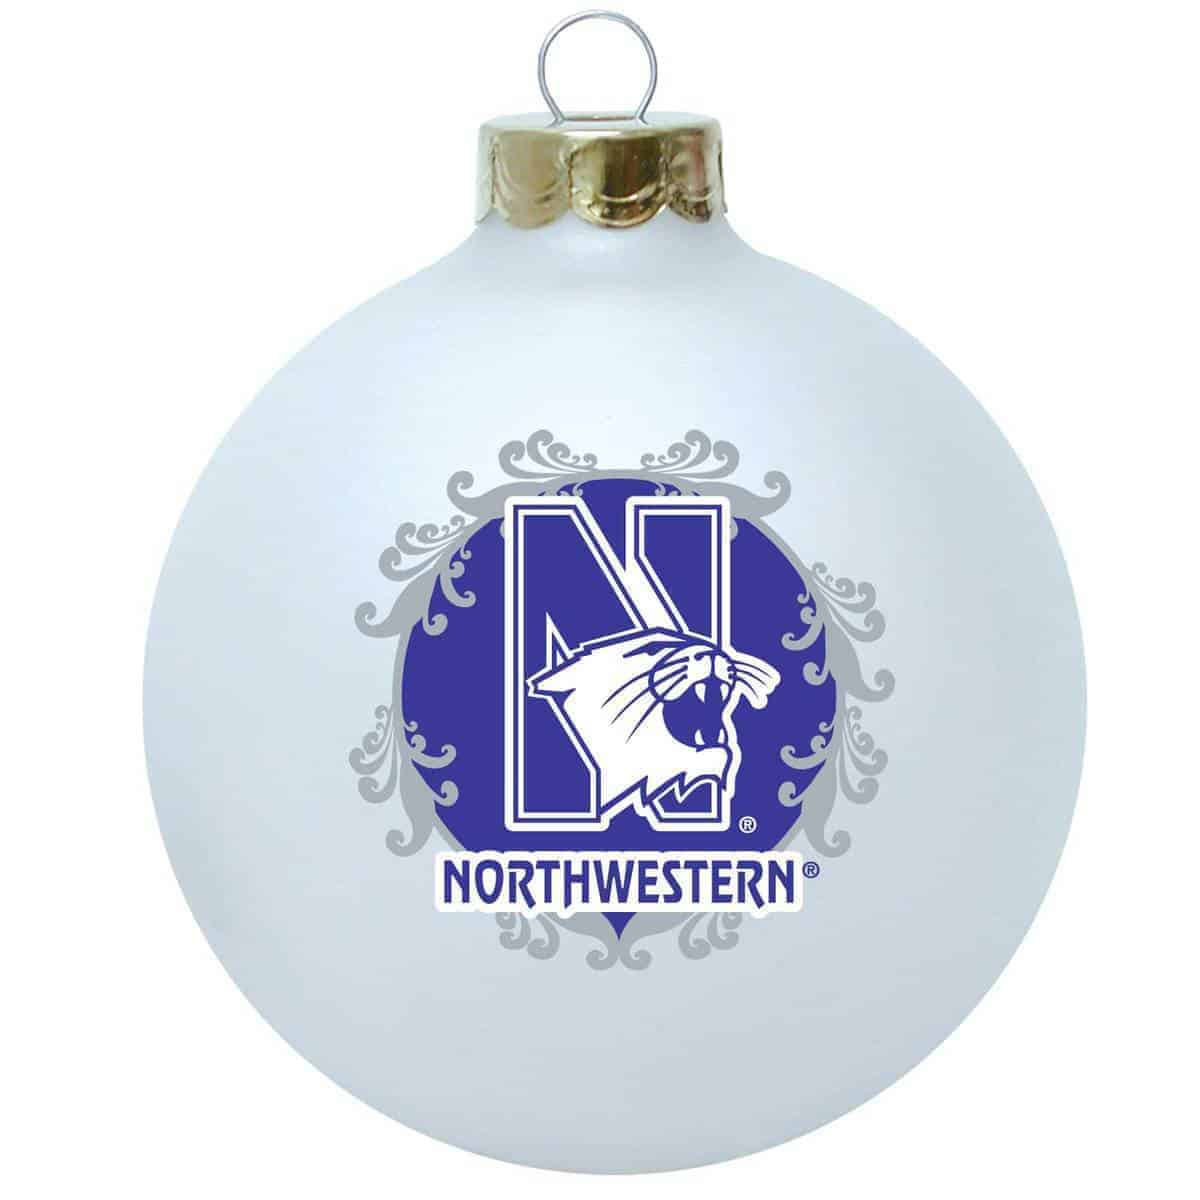 Northwestern University Wildcats White Christmas Ornament With NCat